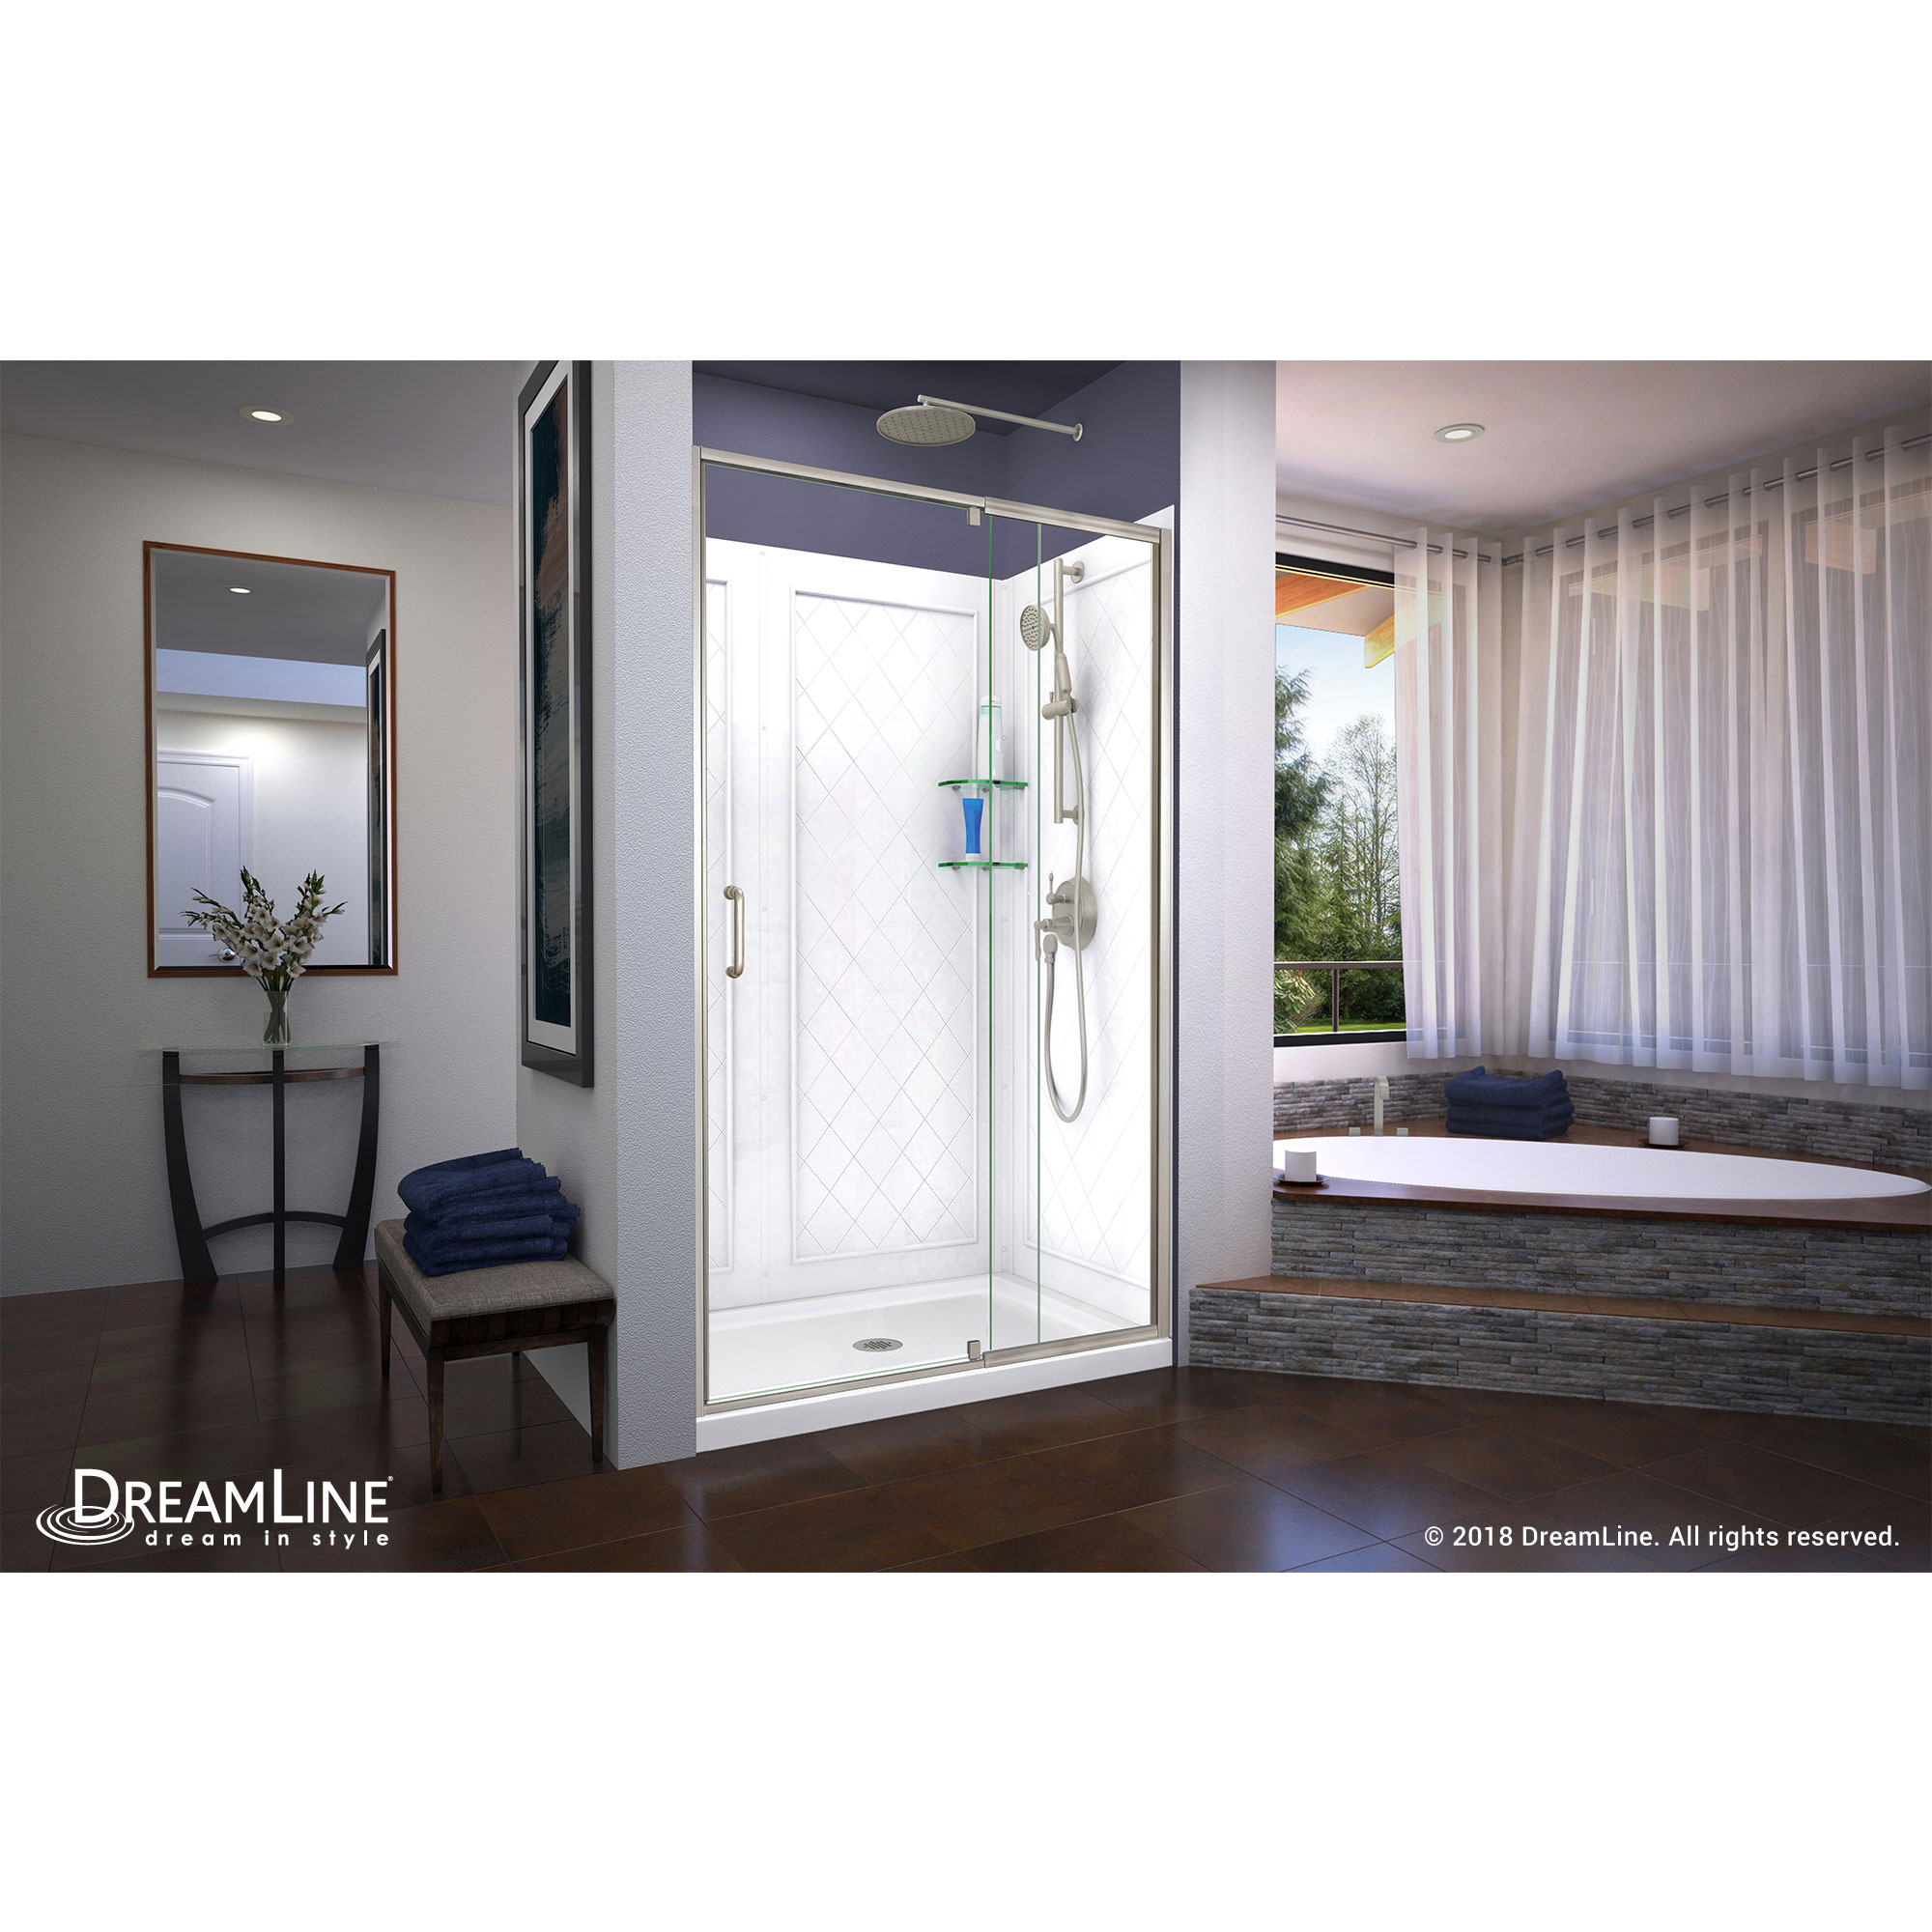 DreamLine Flex 36 in. D x 48 in. W x 76 3/4 in. H Semi-Frameless Shower Door in Brushed Nickel with Center Drain Base, Backwalls